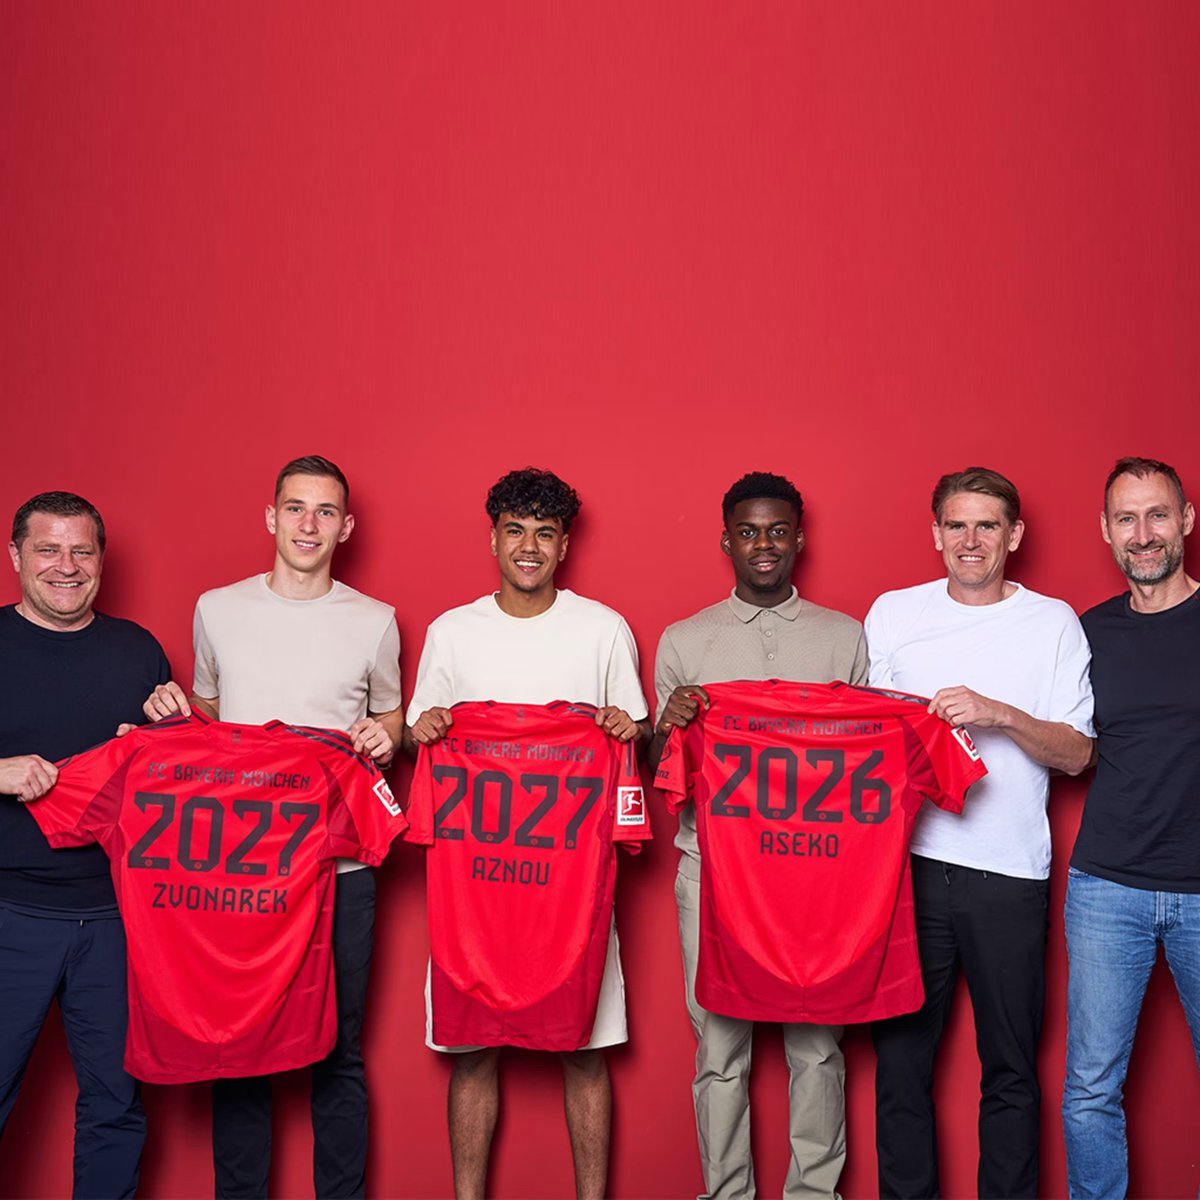 OFFICIAL: Lovro Zvonarek, Adam Aznou and Noël Aséko Nkili have signed professional contracts at FC Bayern